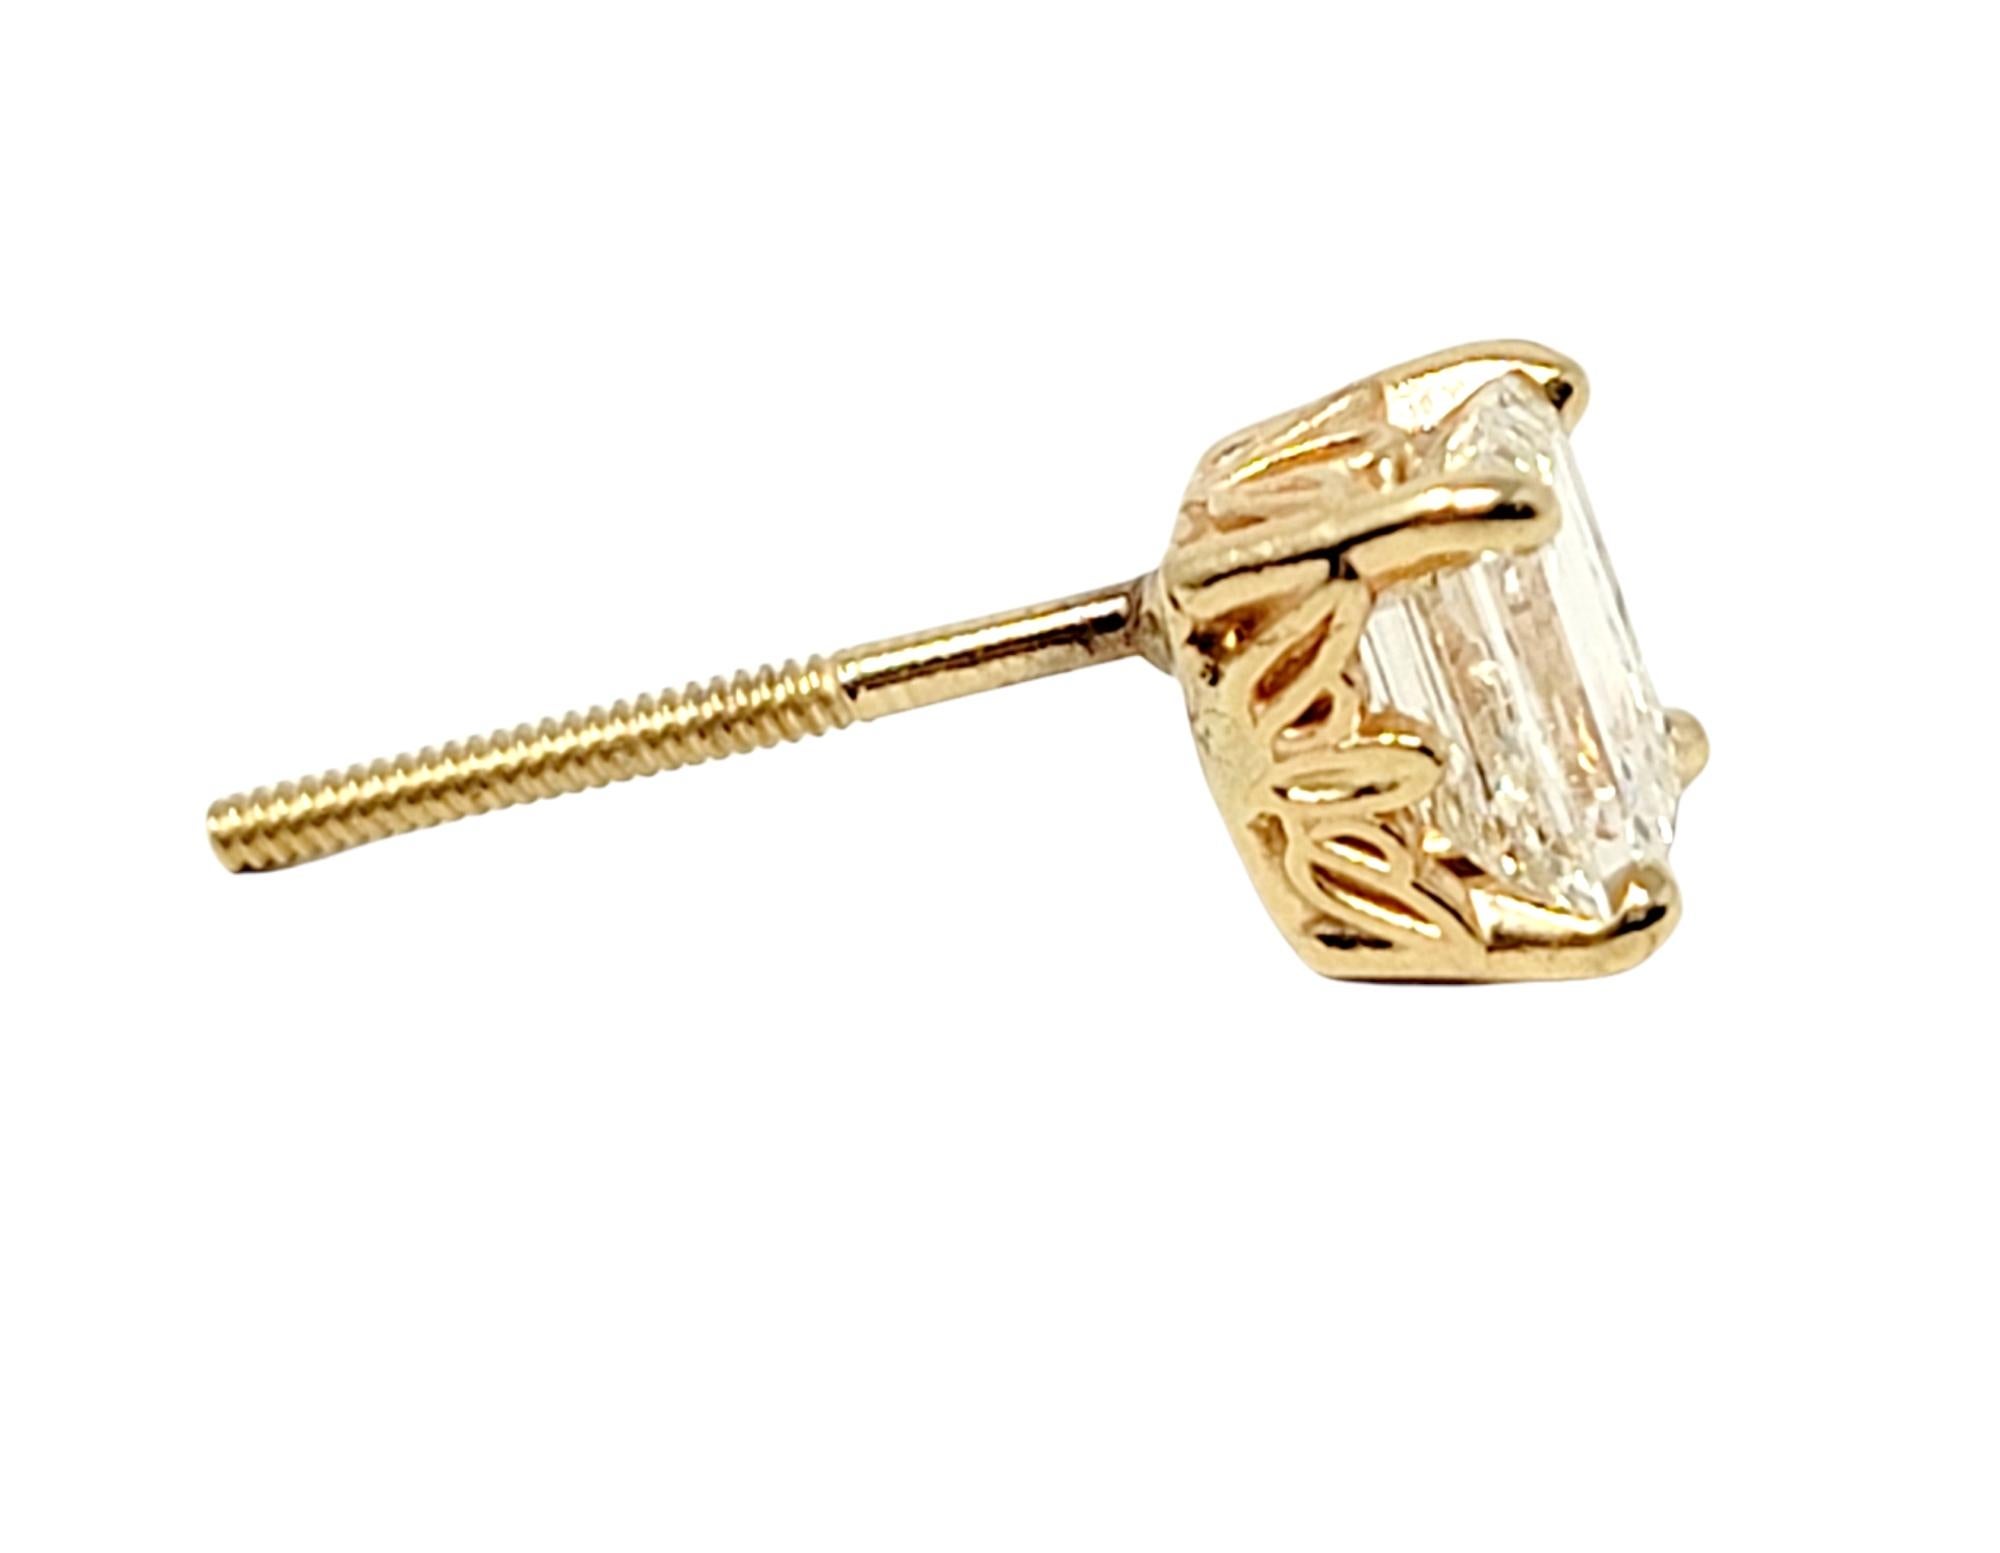 1.05 Carat Total Emerald Cut Diamond Stud Earrings in 14 Karat Yellow Gold In Good Condition For Sale In Scottsdale, AZ